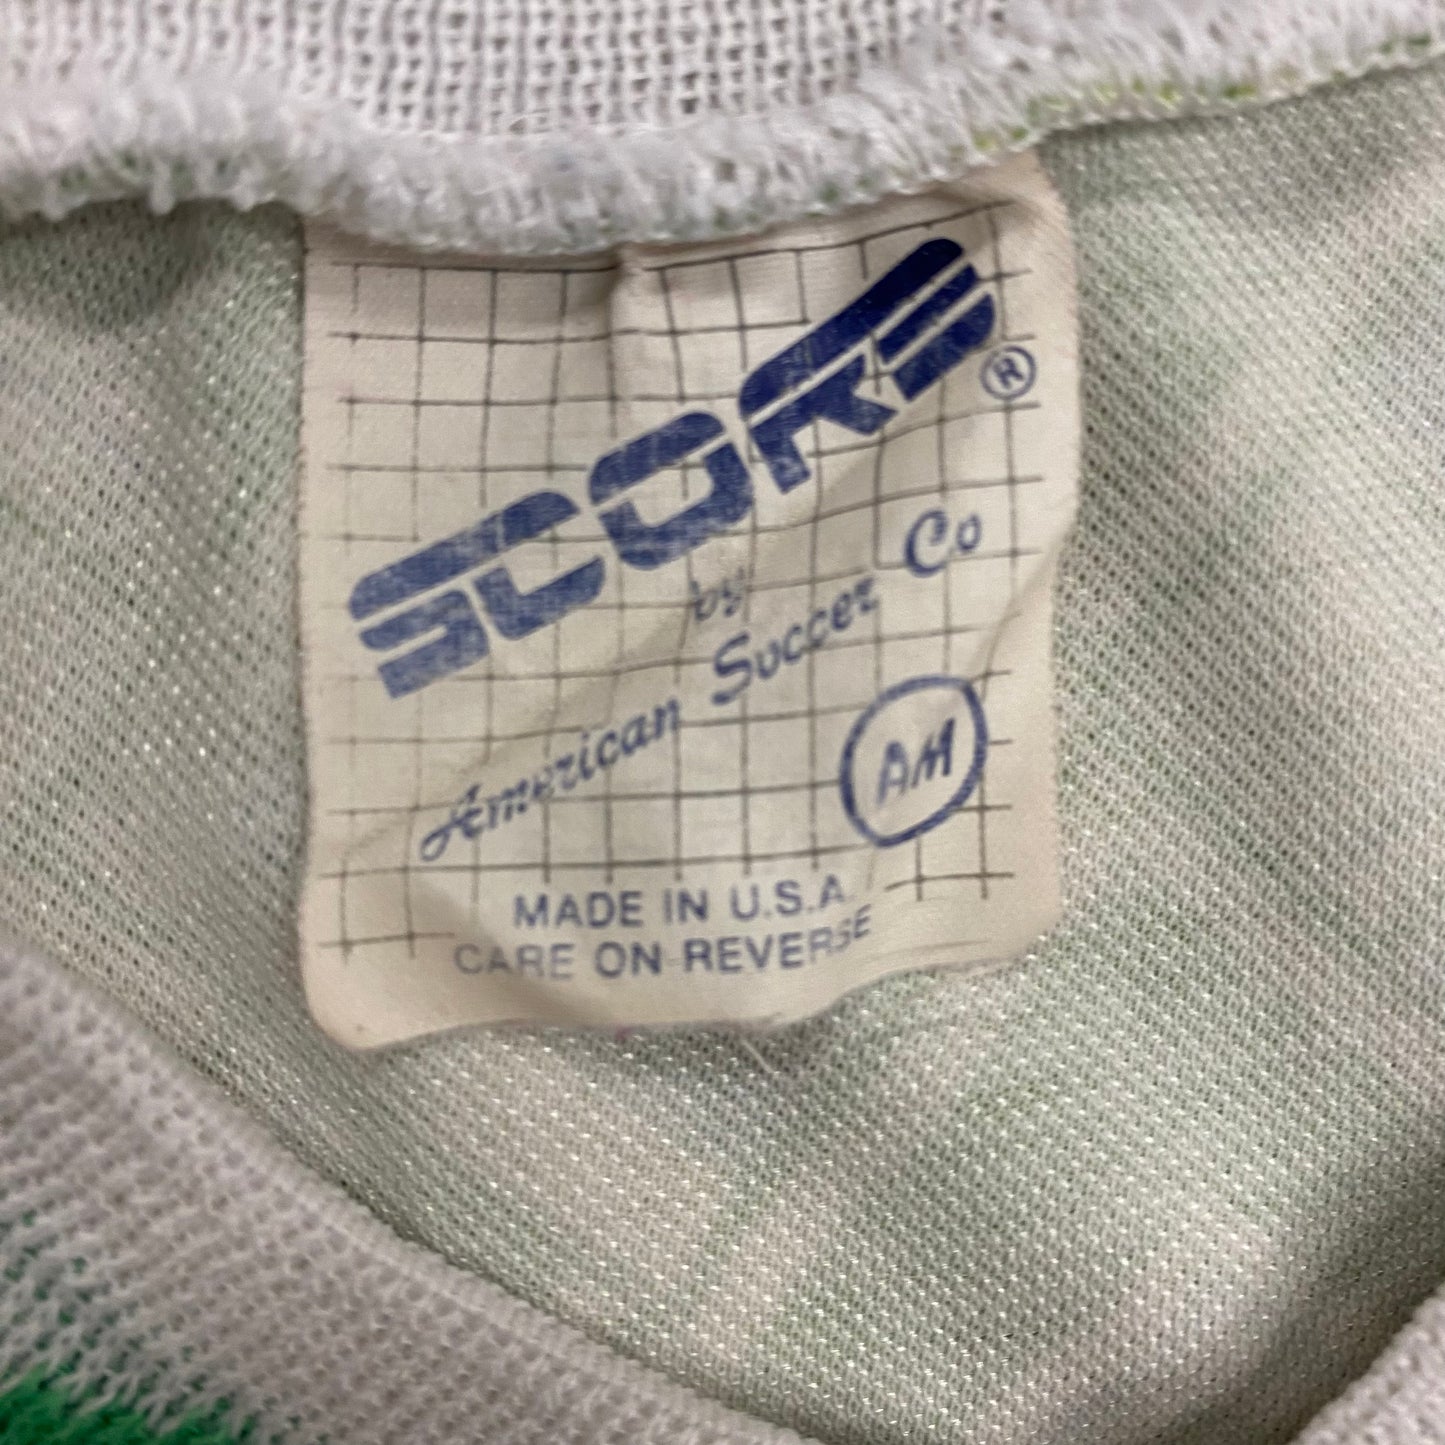 Vintage 1990s Score Green Diamond Soccer Jersey - Size Medium